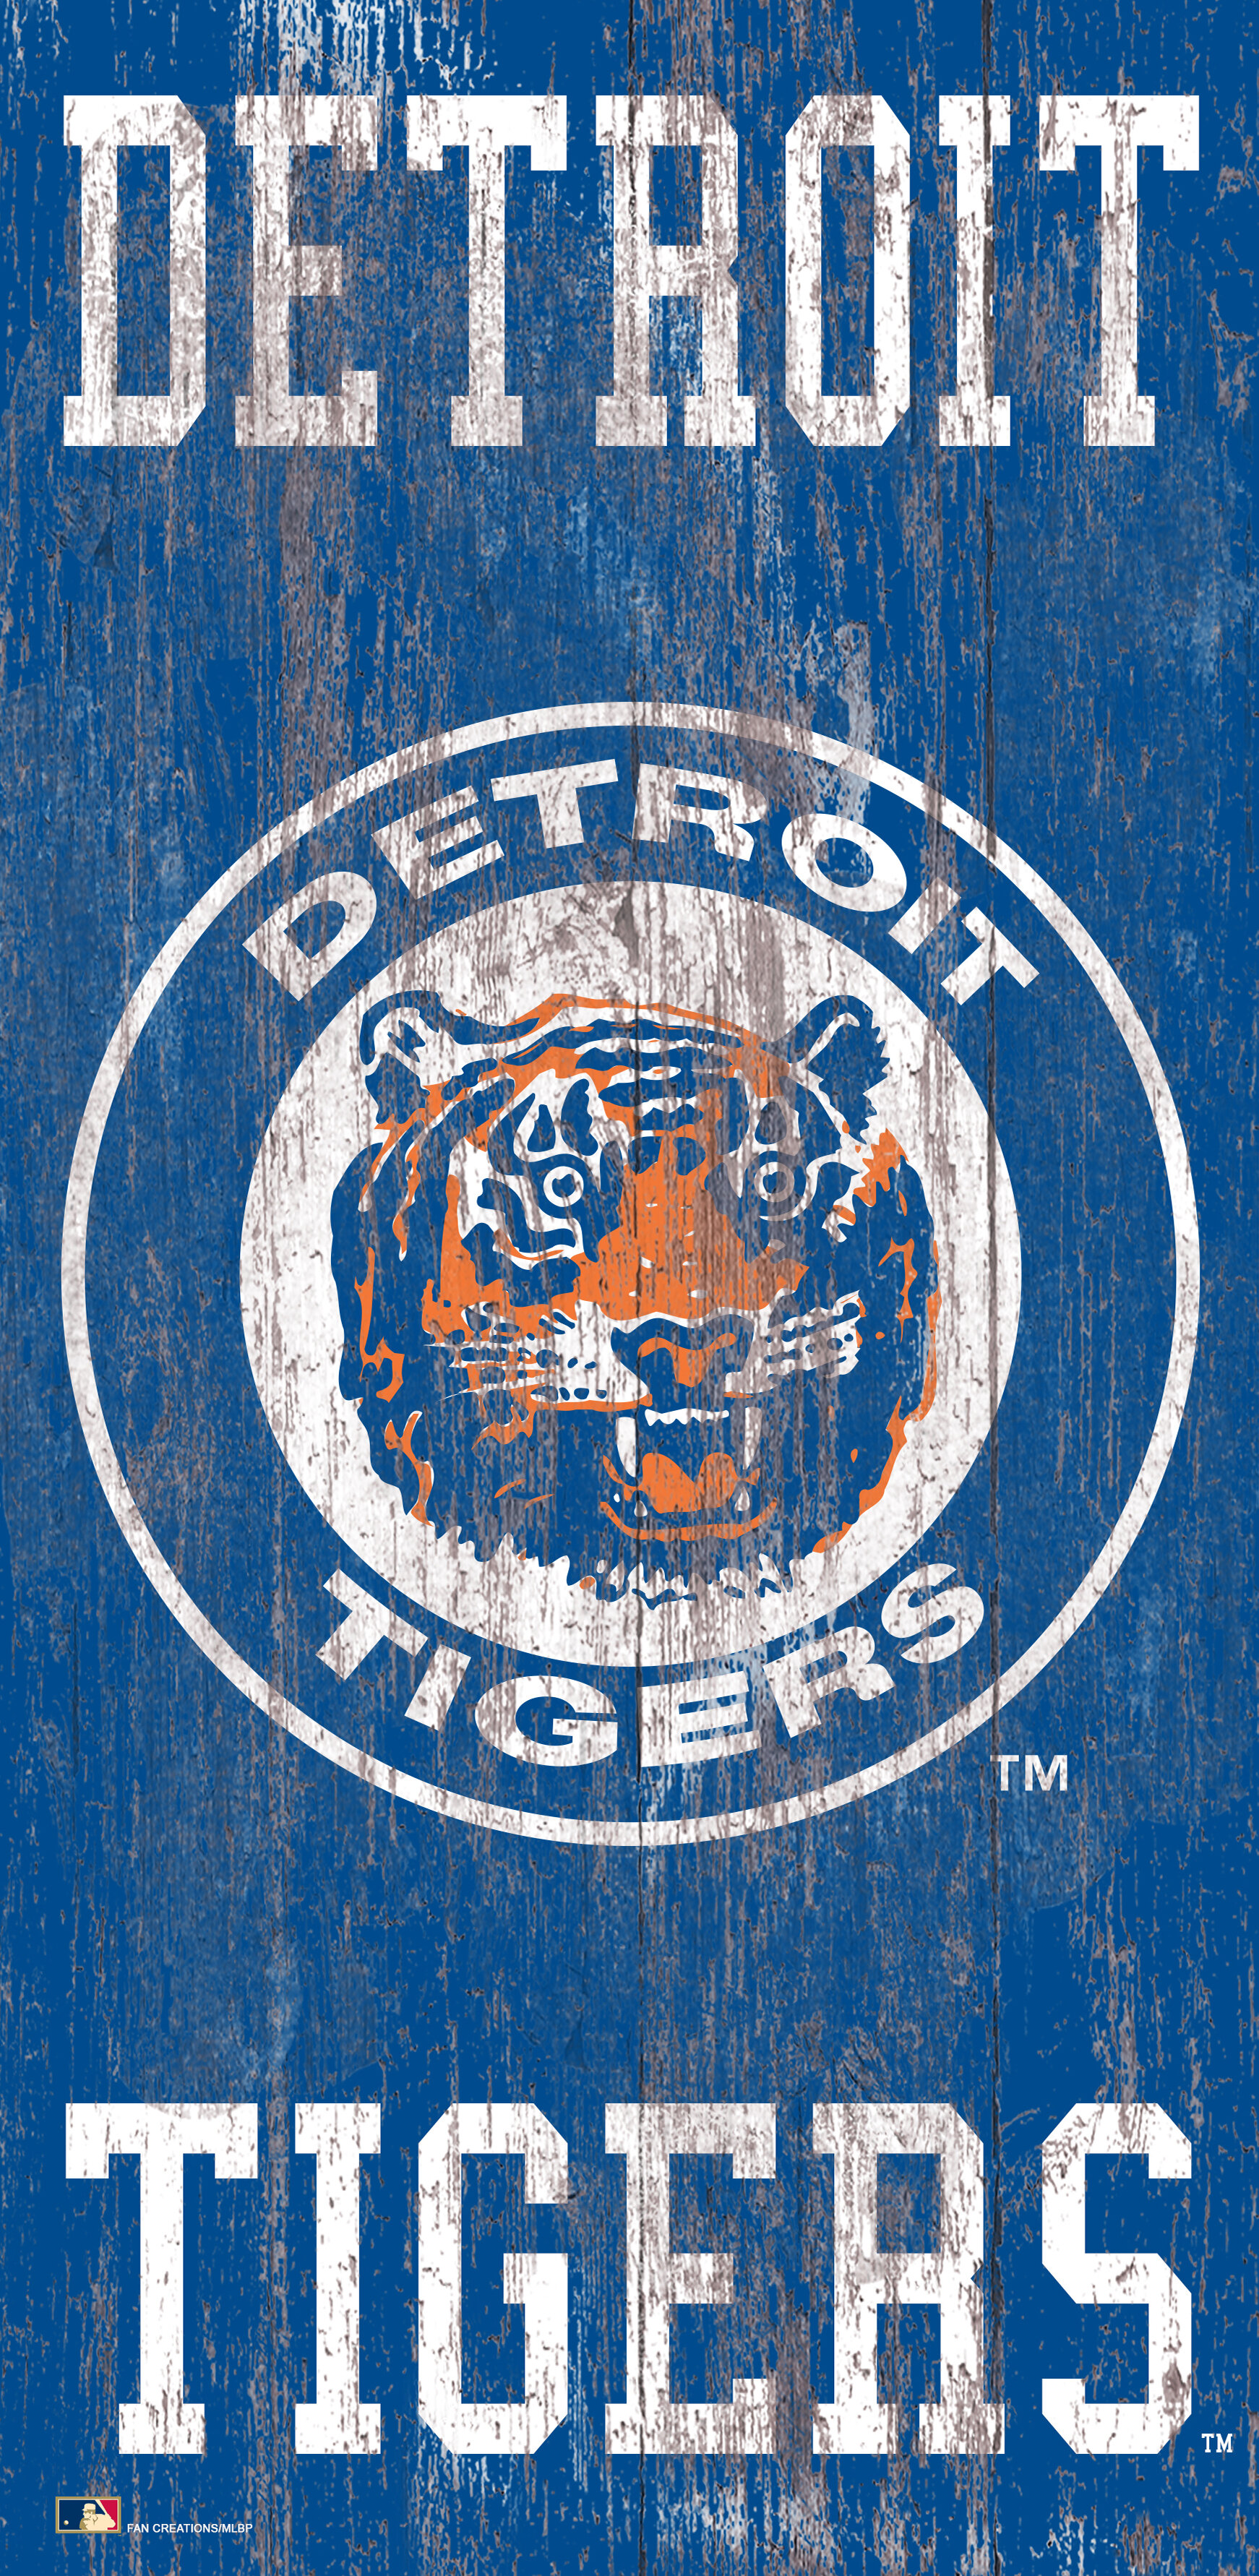 Twinsburg schools reach understanding with Detroit Tigers over mascot